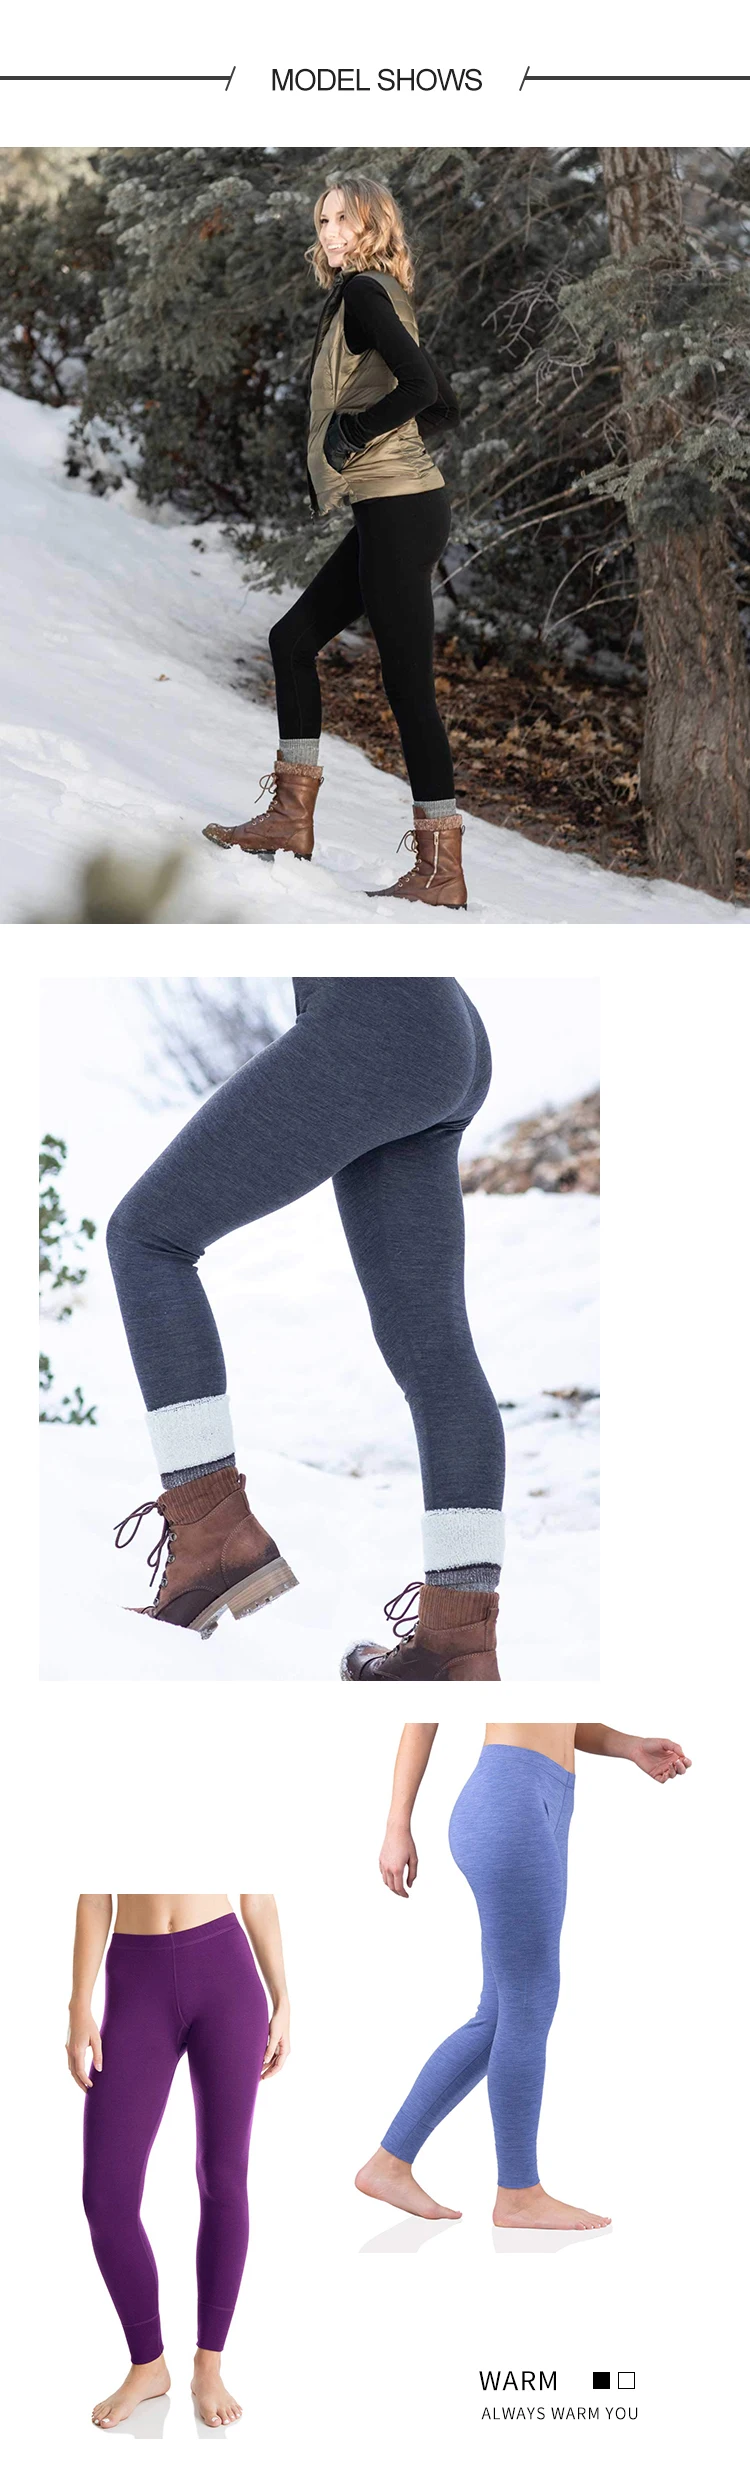 Enerup Winter Women'S High Elastic Merino Wool Thermal Wear Clothing Long Johns Underwear Suit Set